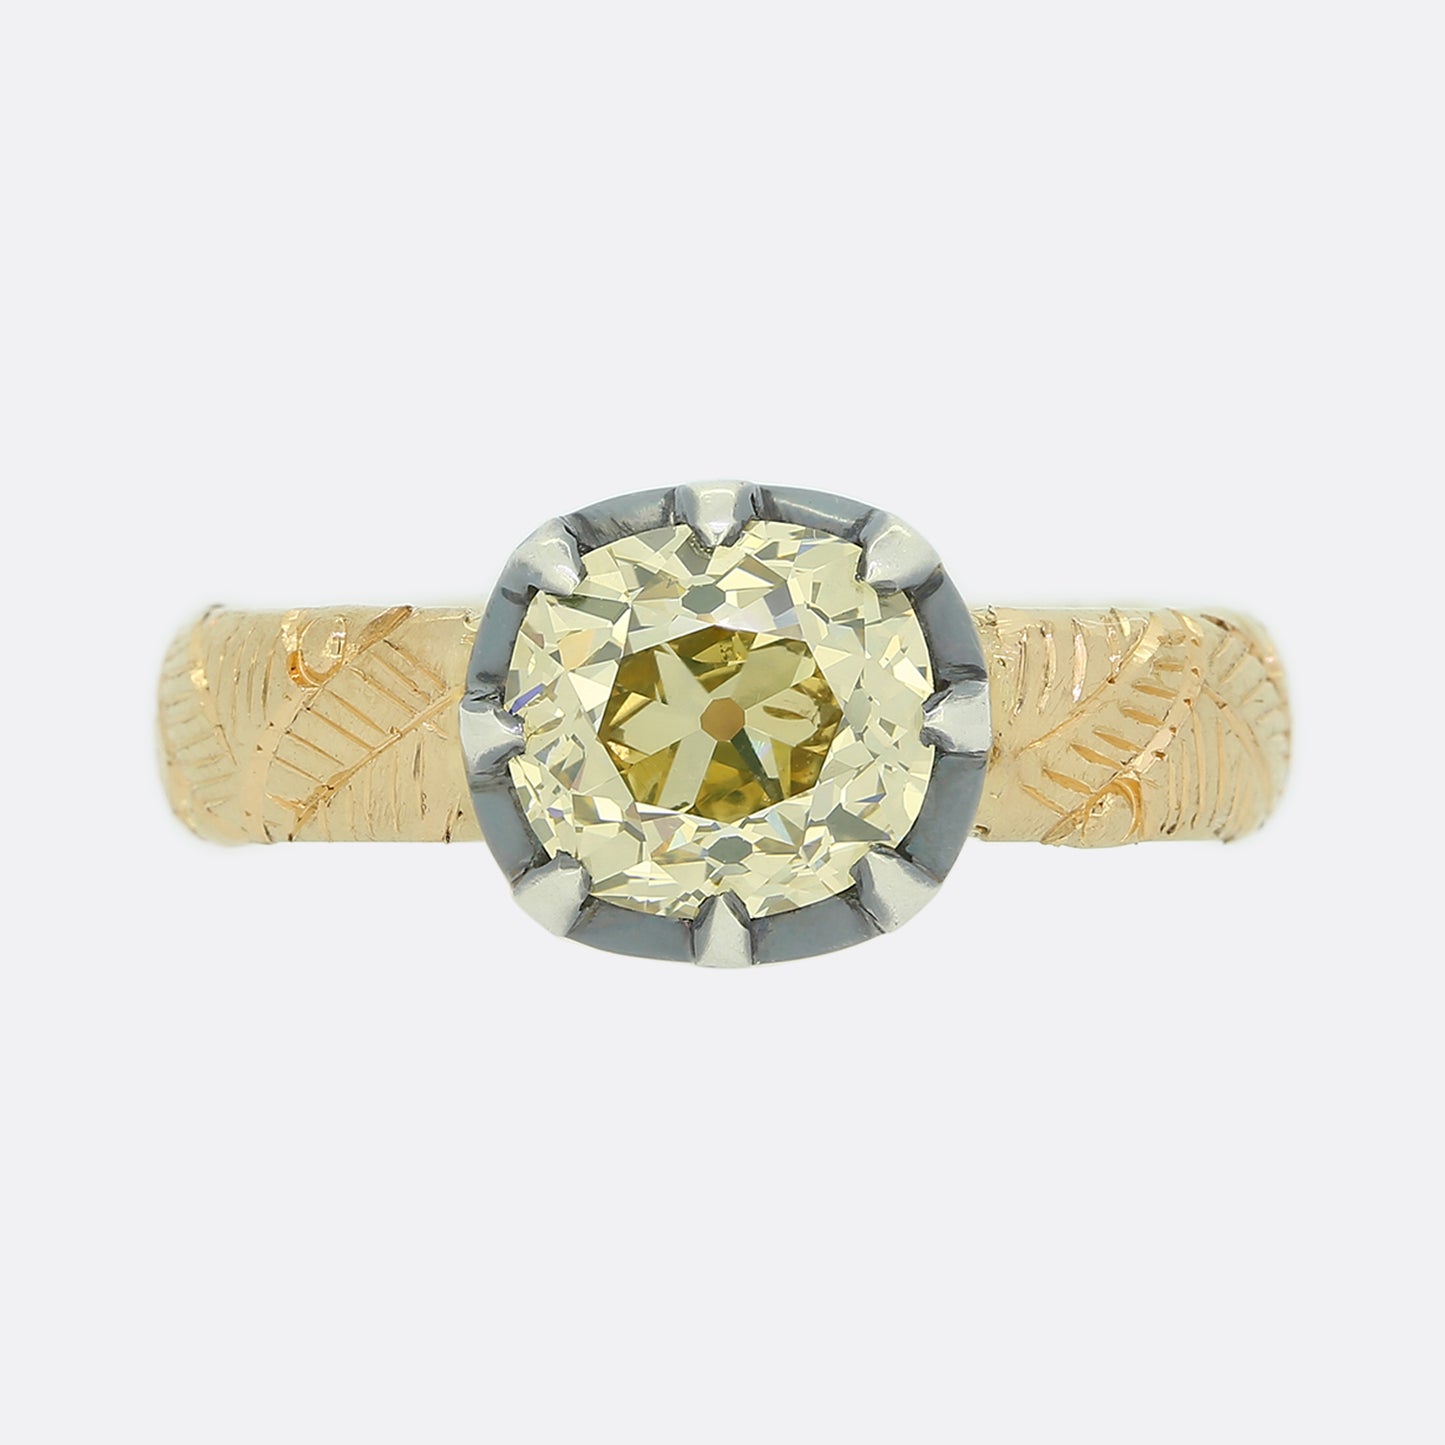 1.71 Carat Georgian Style Old Cushion Cut Diamond Ring